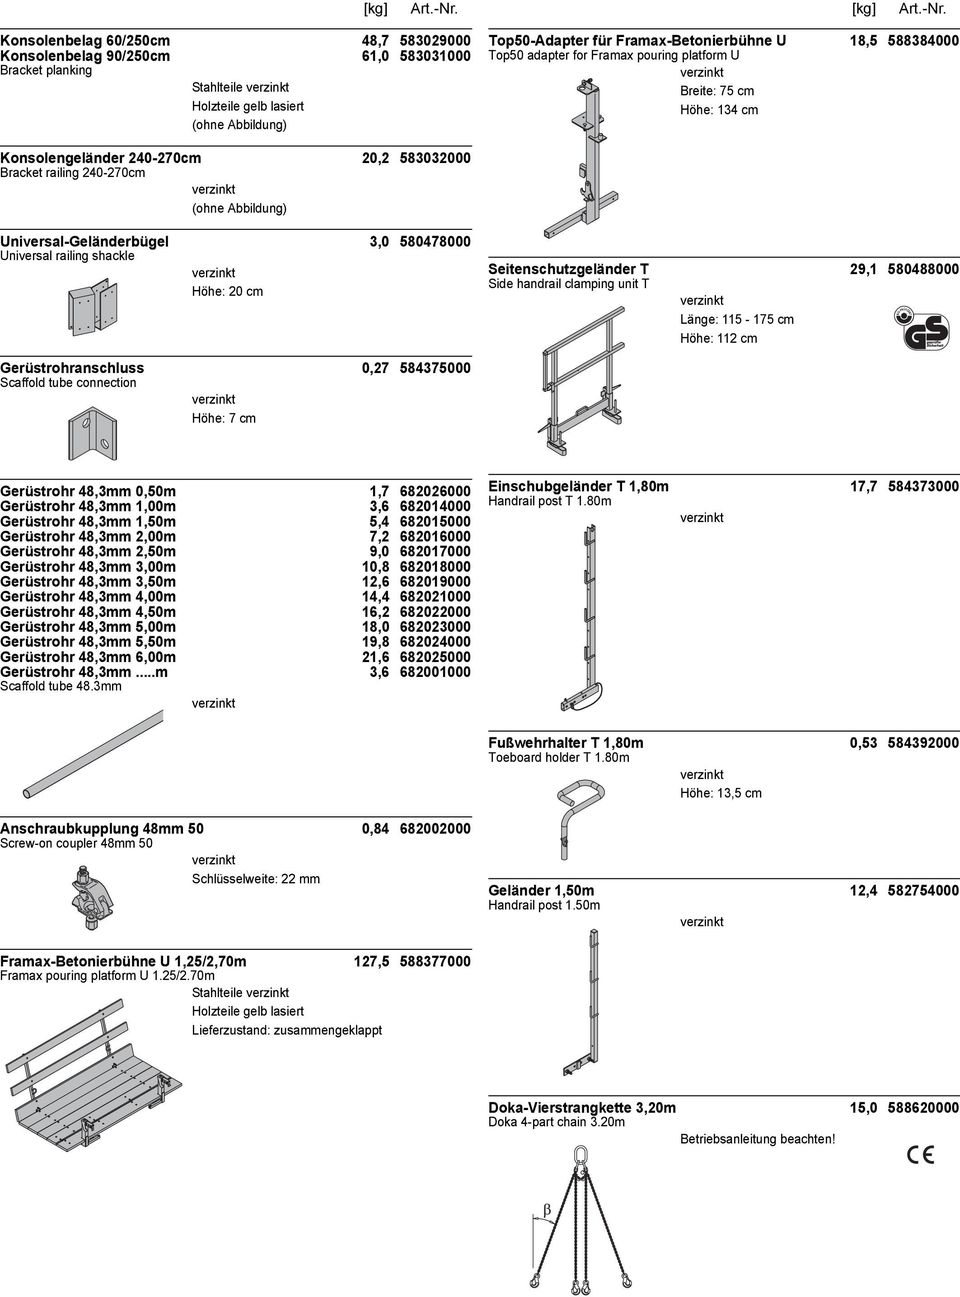 Universal railing shackle Höhe: 20 cm Gerüstrohranschluss 0,27 584375000 Scaffold tube connection Höhe: 7 cm Seitenschutzgeländer T 29,1 580488000 Side handrail clamping unit T Länge: 115-175 cm